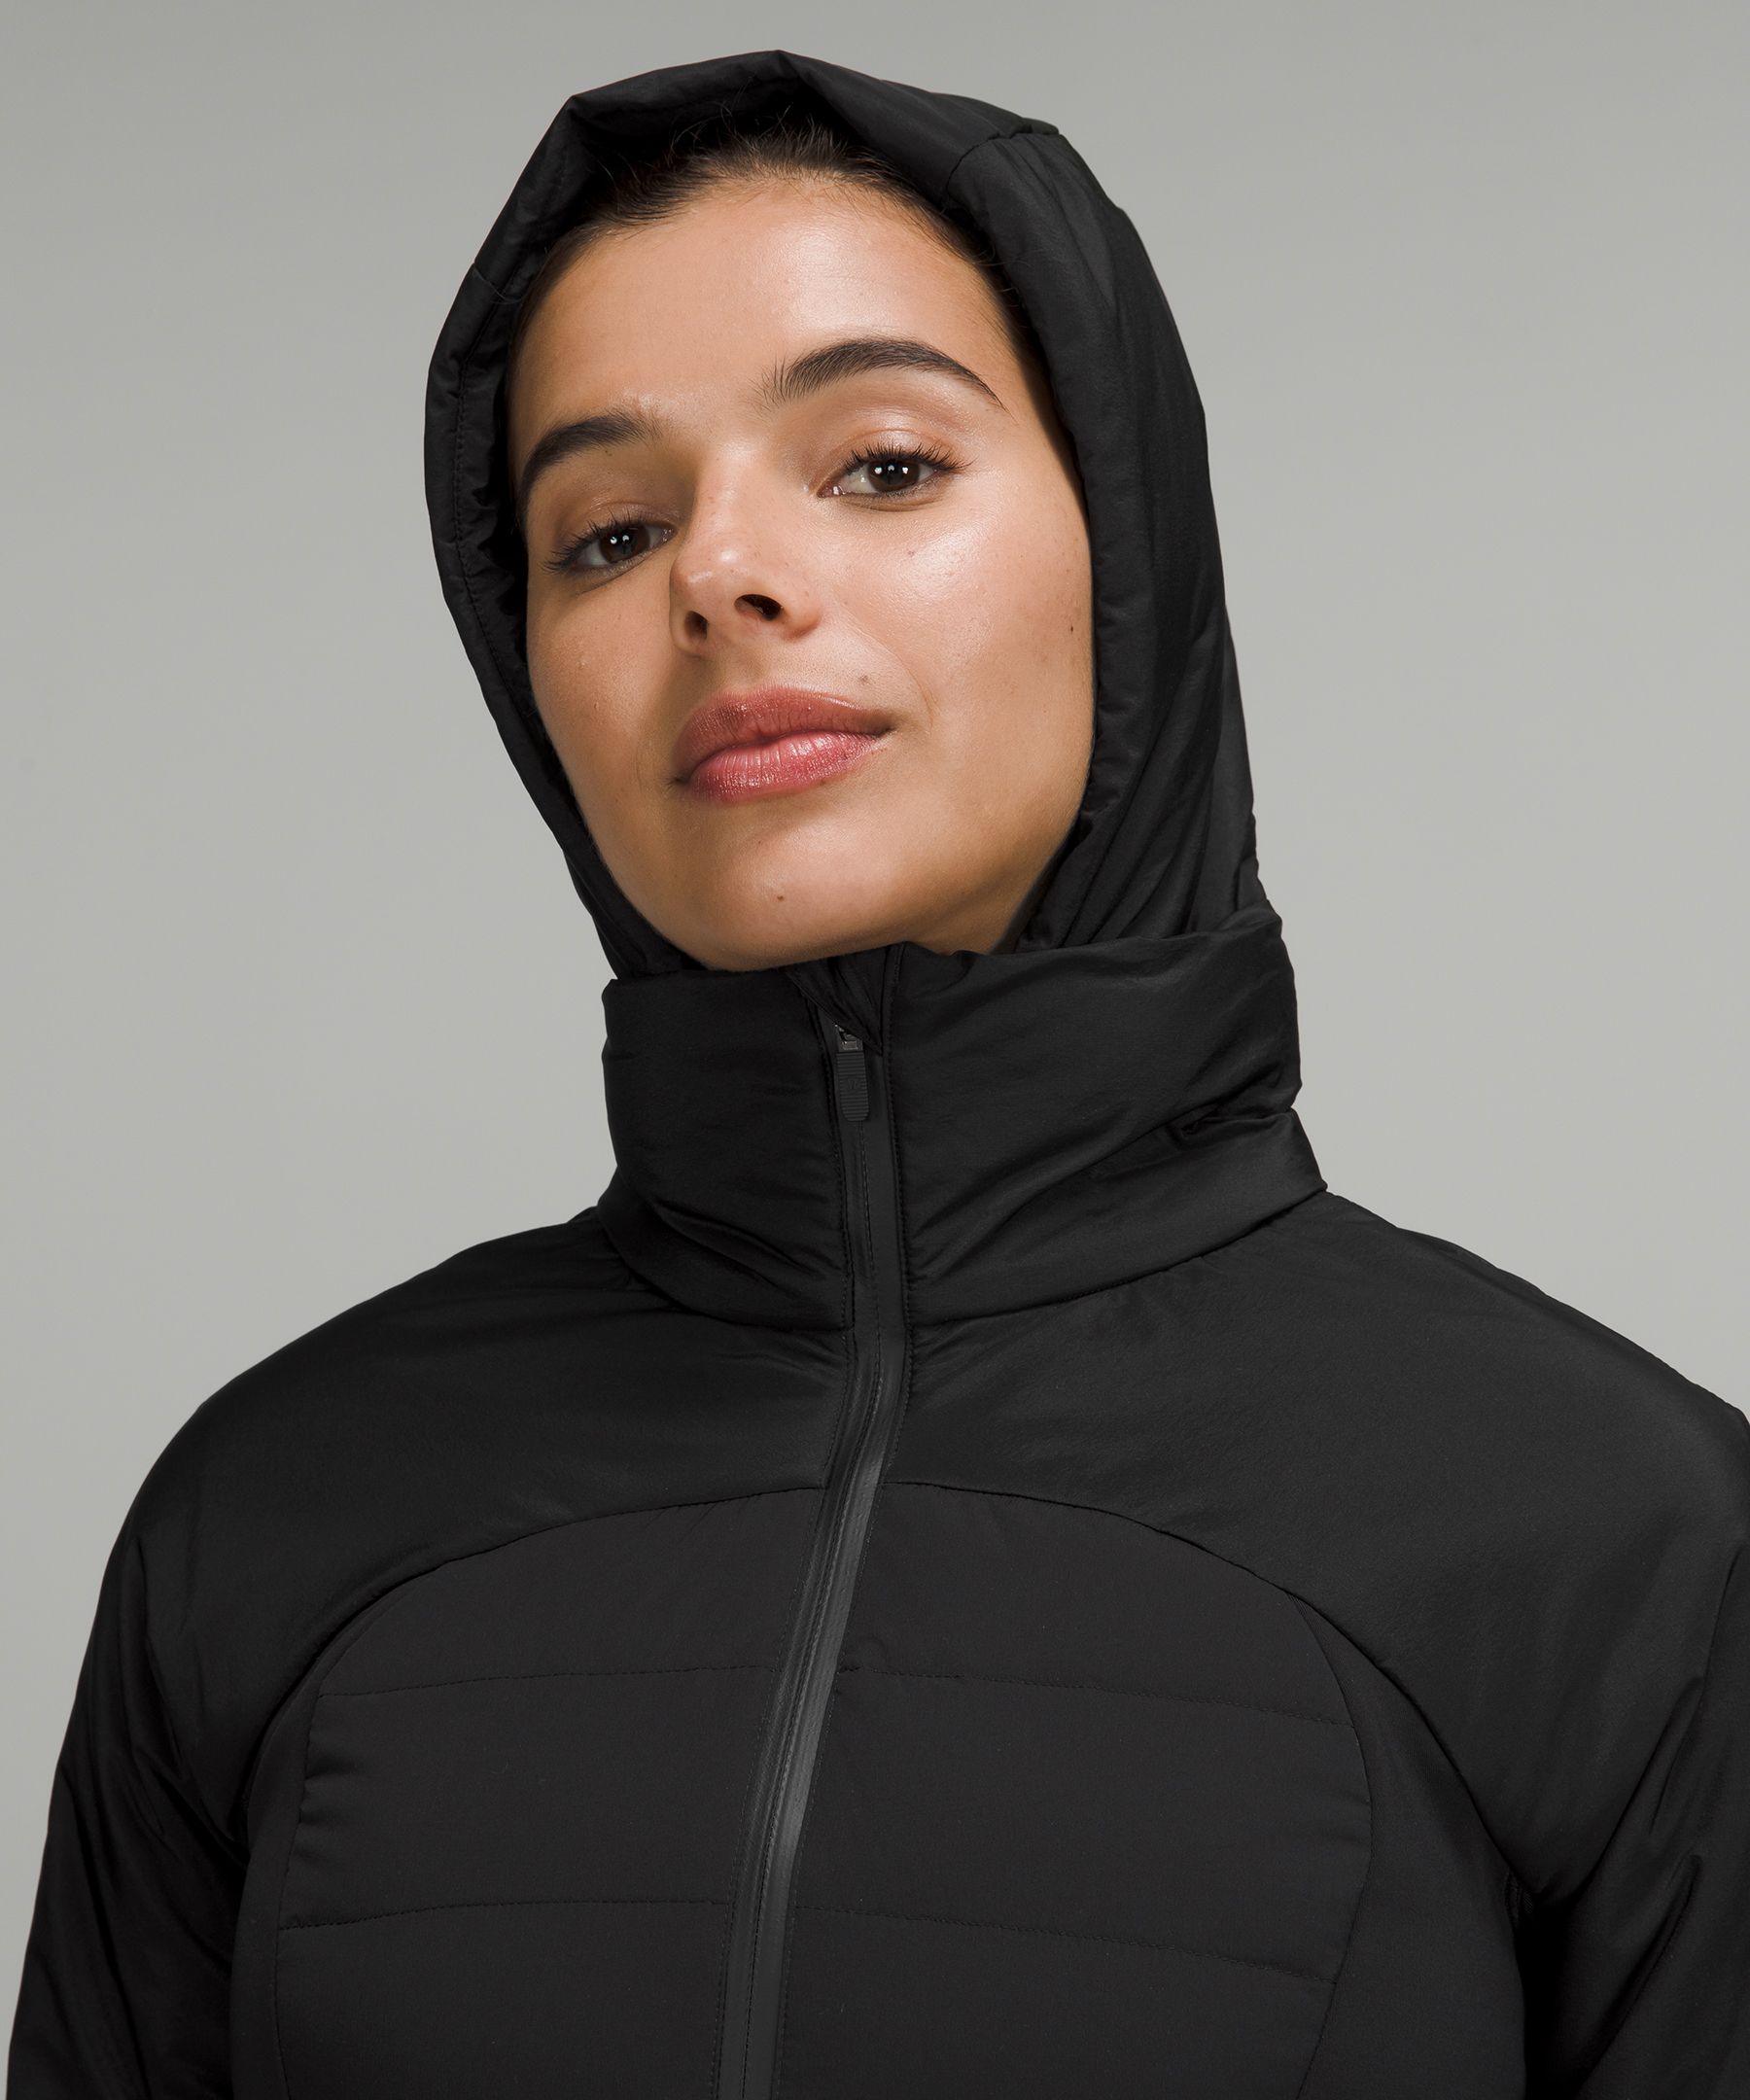 LULULEMON WOMEN'S DOWN For It All Jacket Black UK Size 10, US size 6  £149.99 - PicClick UK